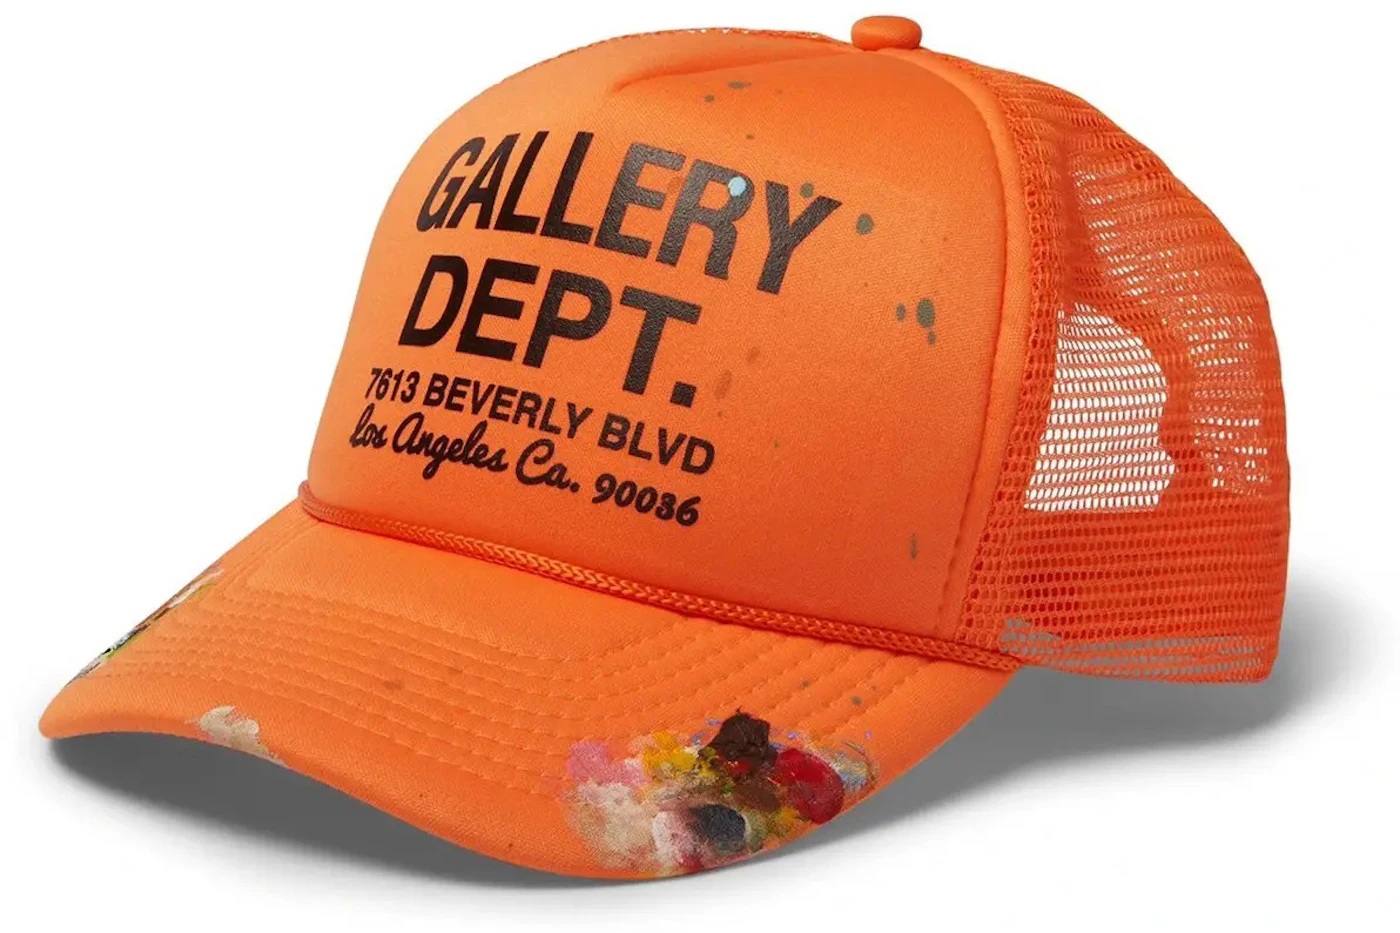 Gallery Dept Workshop Trucker Hat Orange